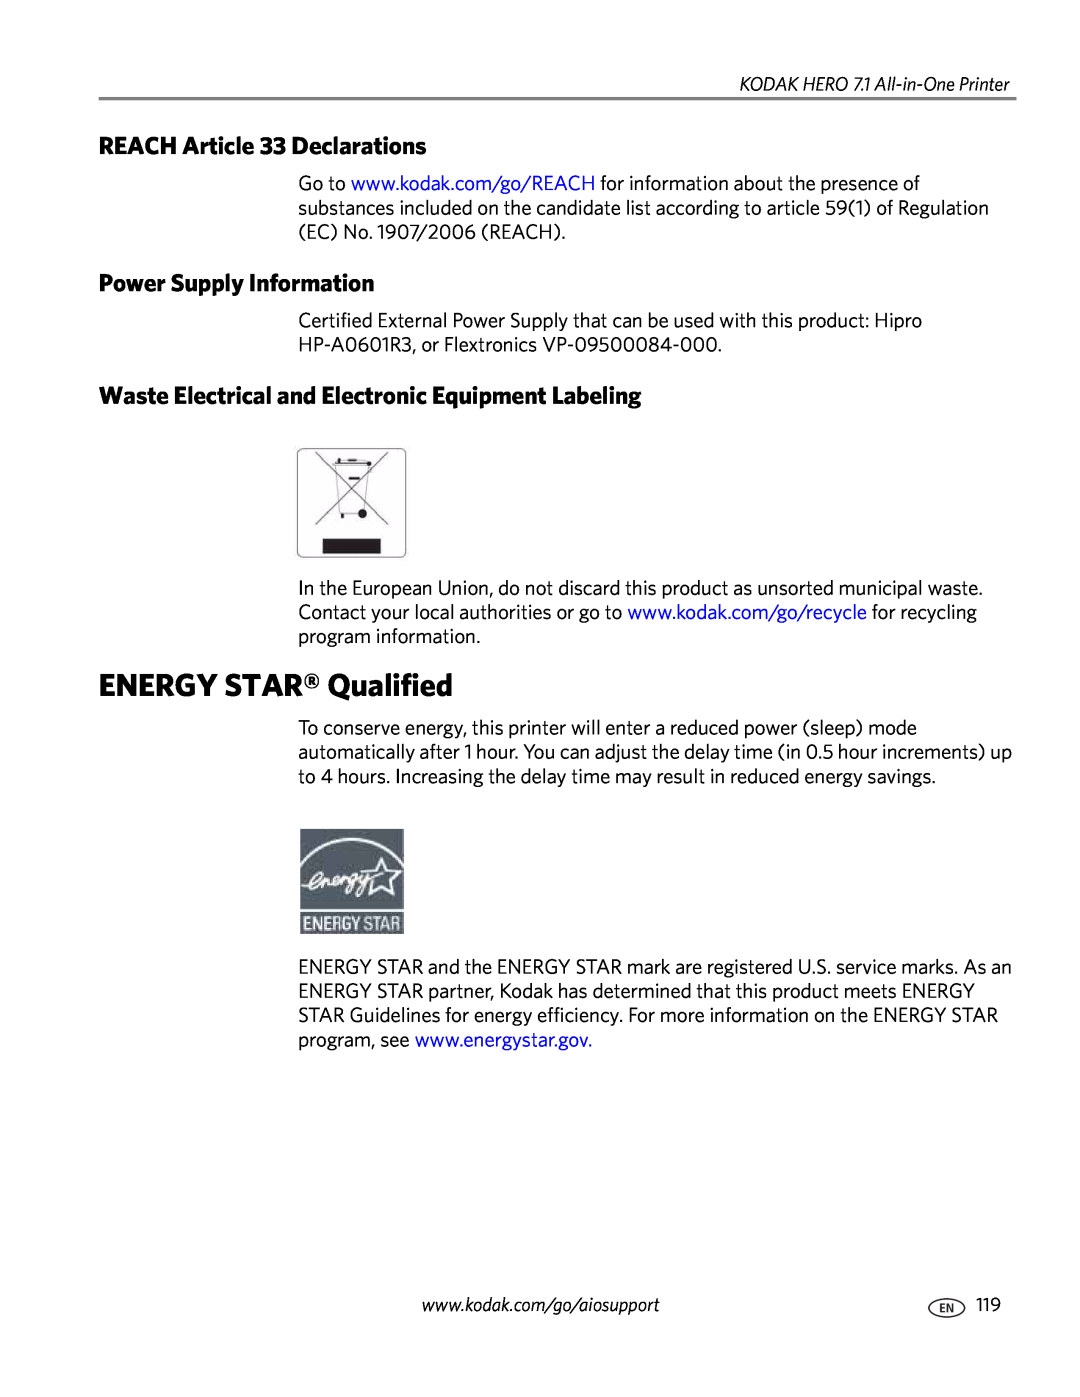 Kodak 7.1 manual ENERGY STAR Qualified, REACH Article 33 Declarations, Power Supply Information 